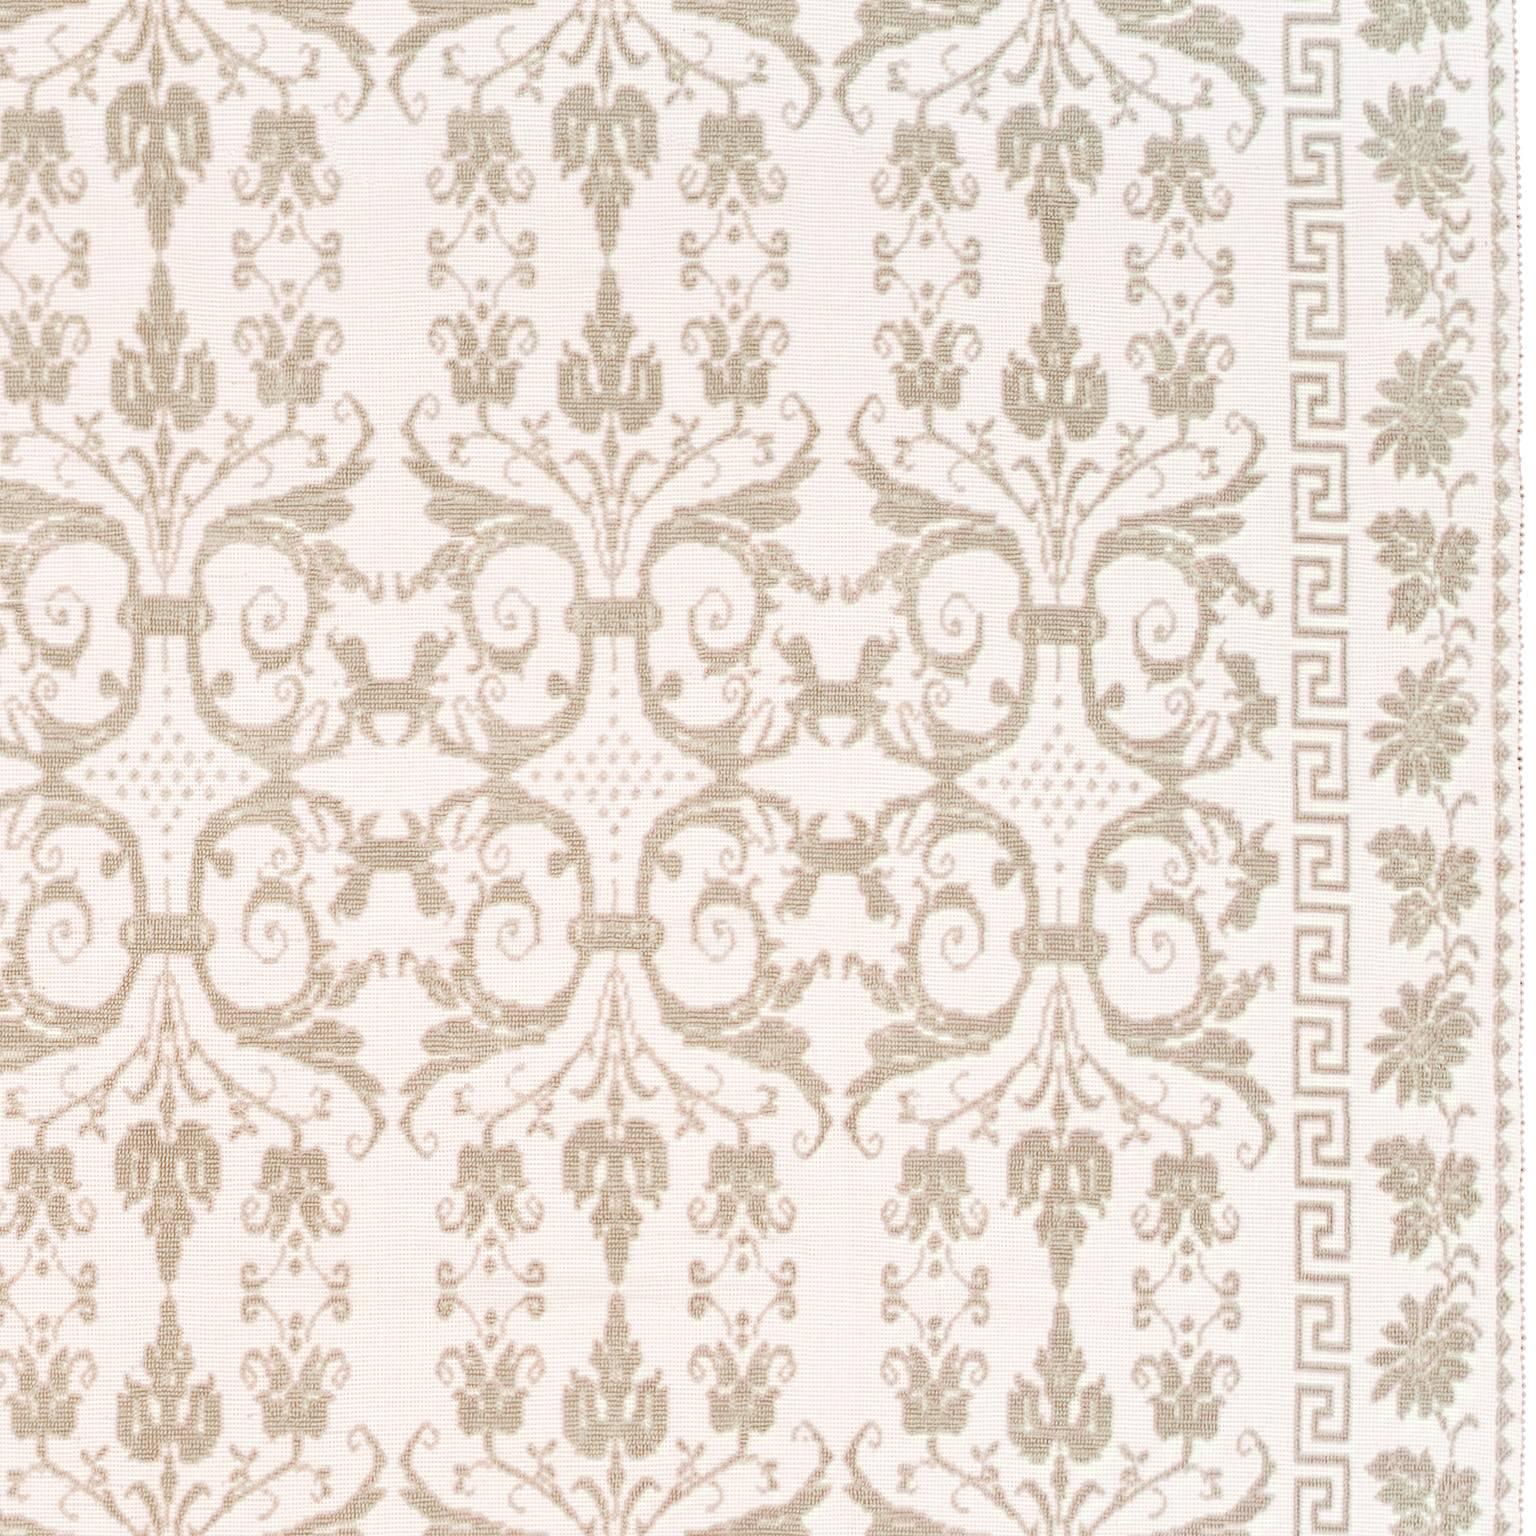 Hand-Woven Contemporary Sardinian 'Coperta Tiziana' Carpet